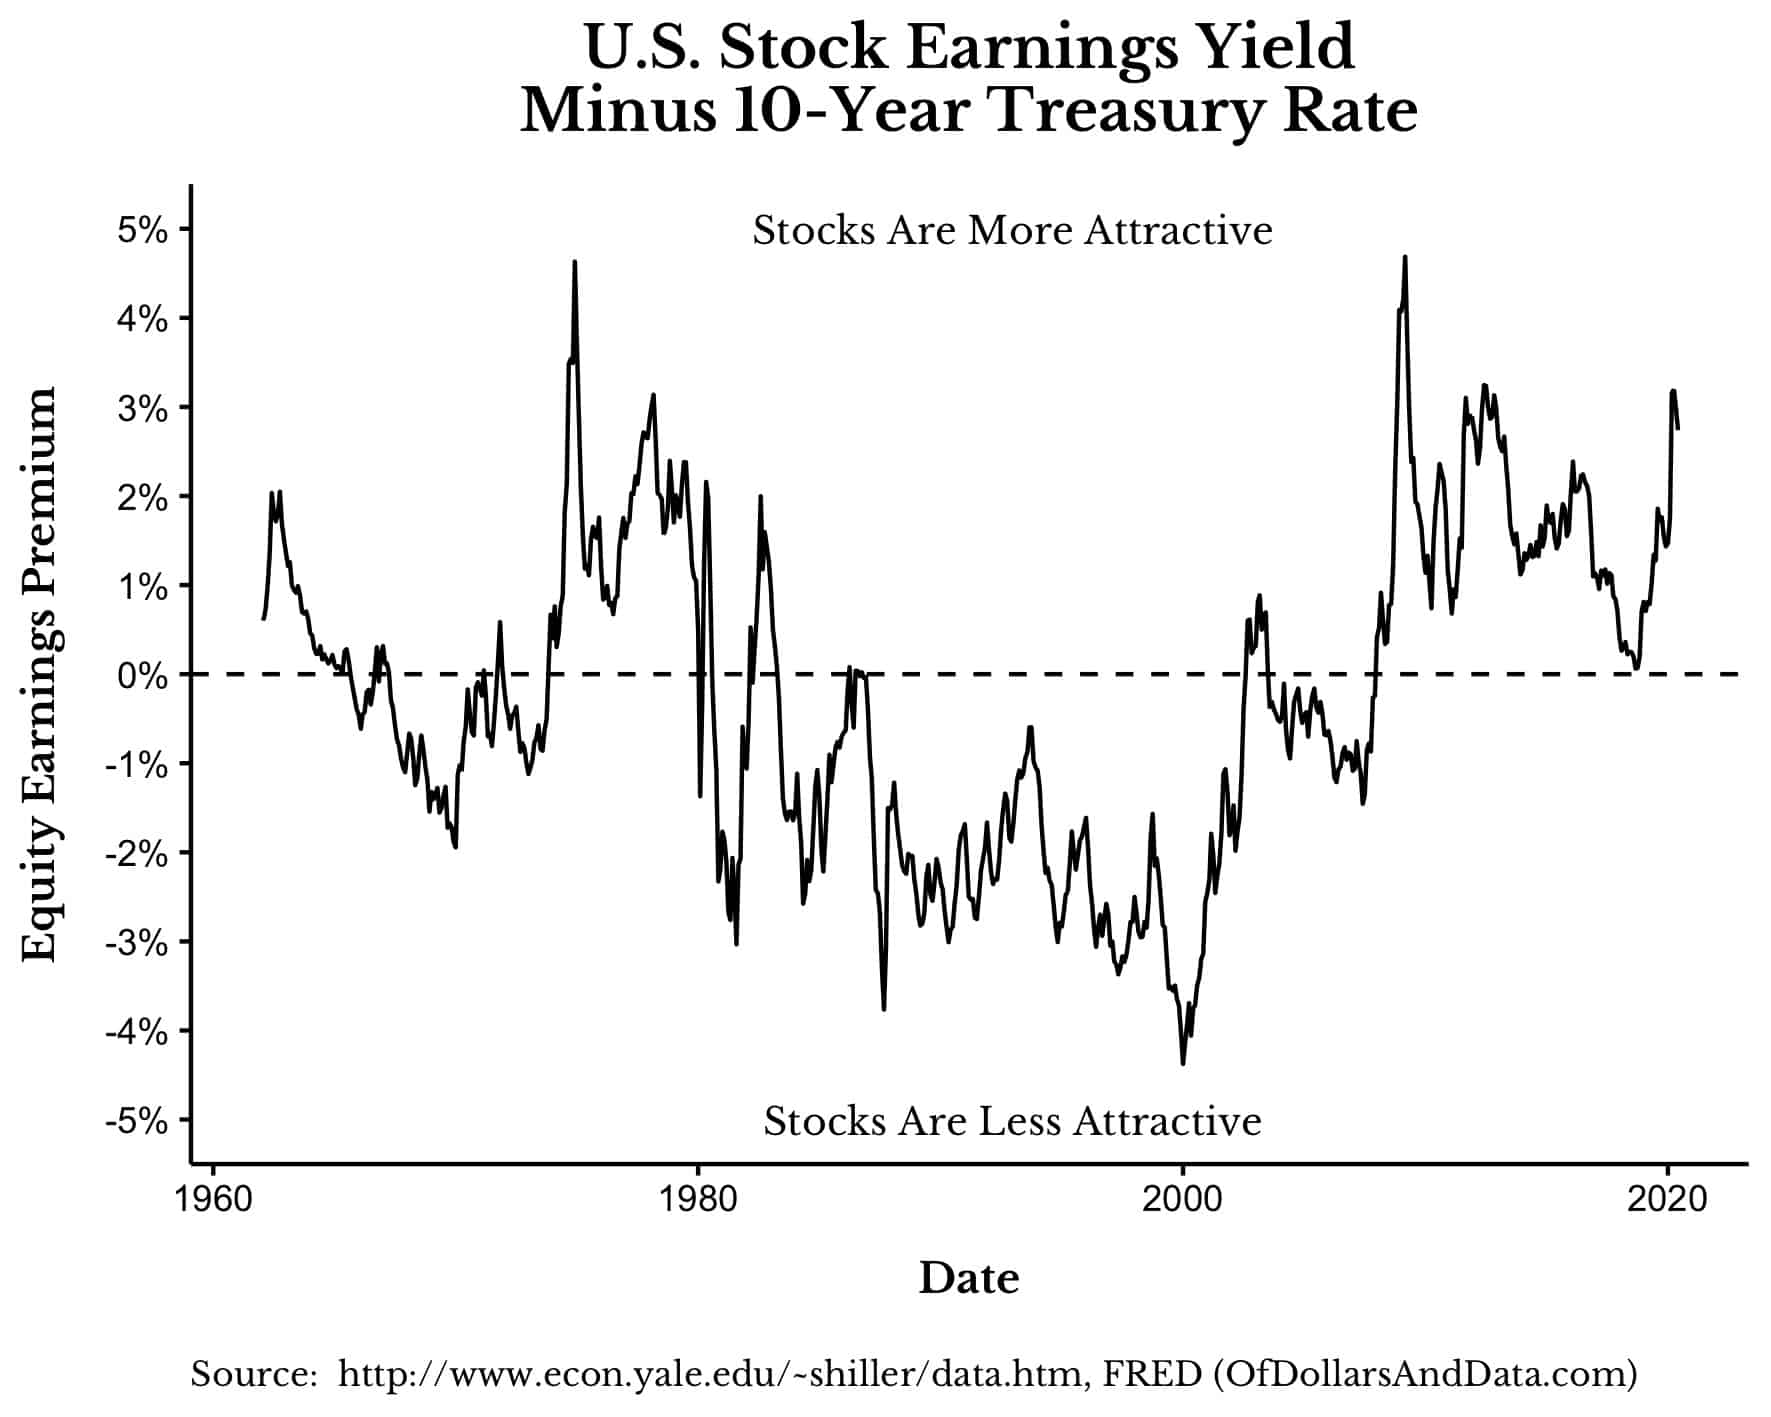 US stock earnings yield minus 10-year Treasury Rate